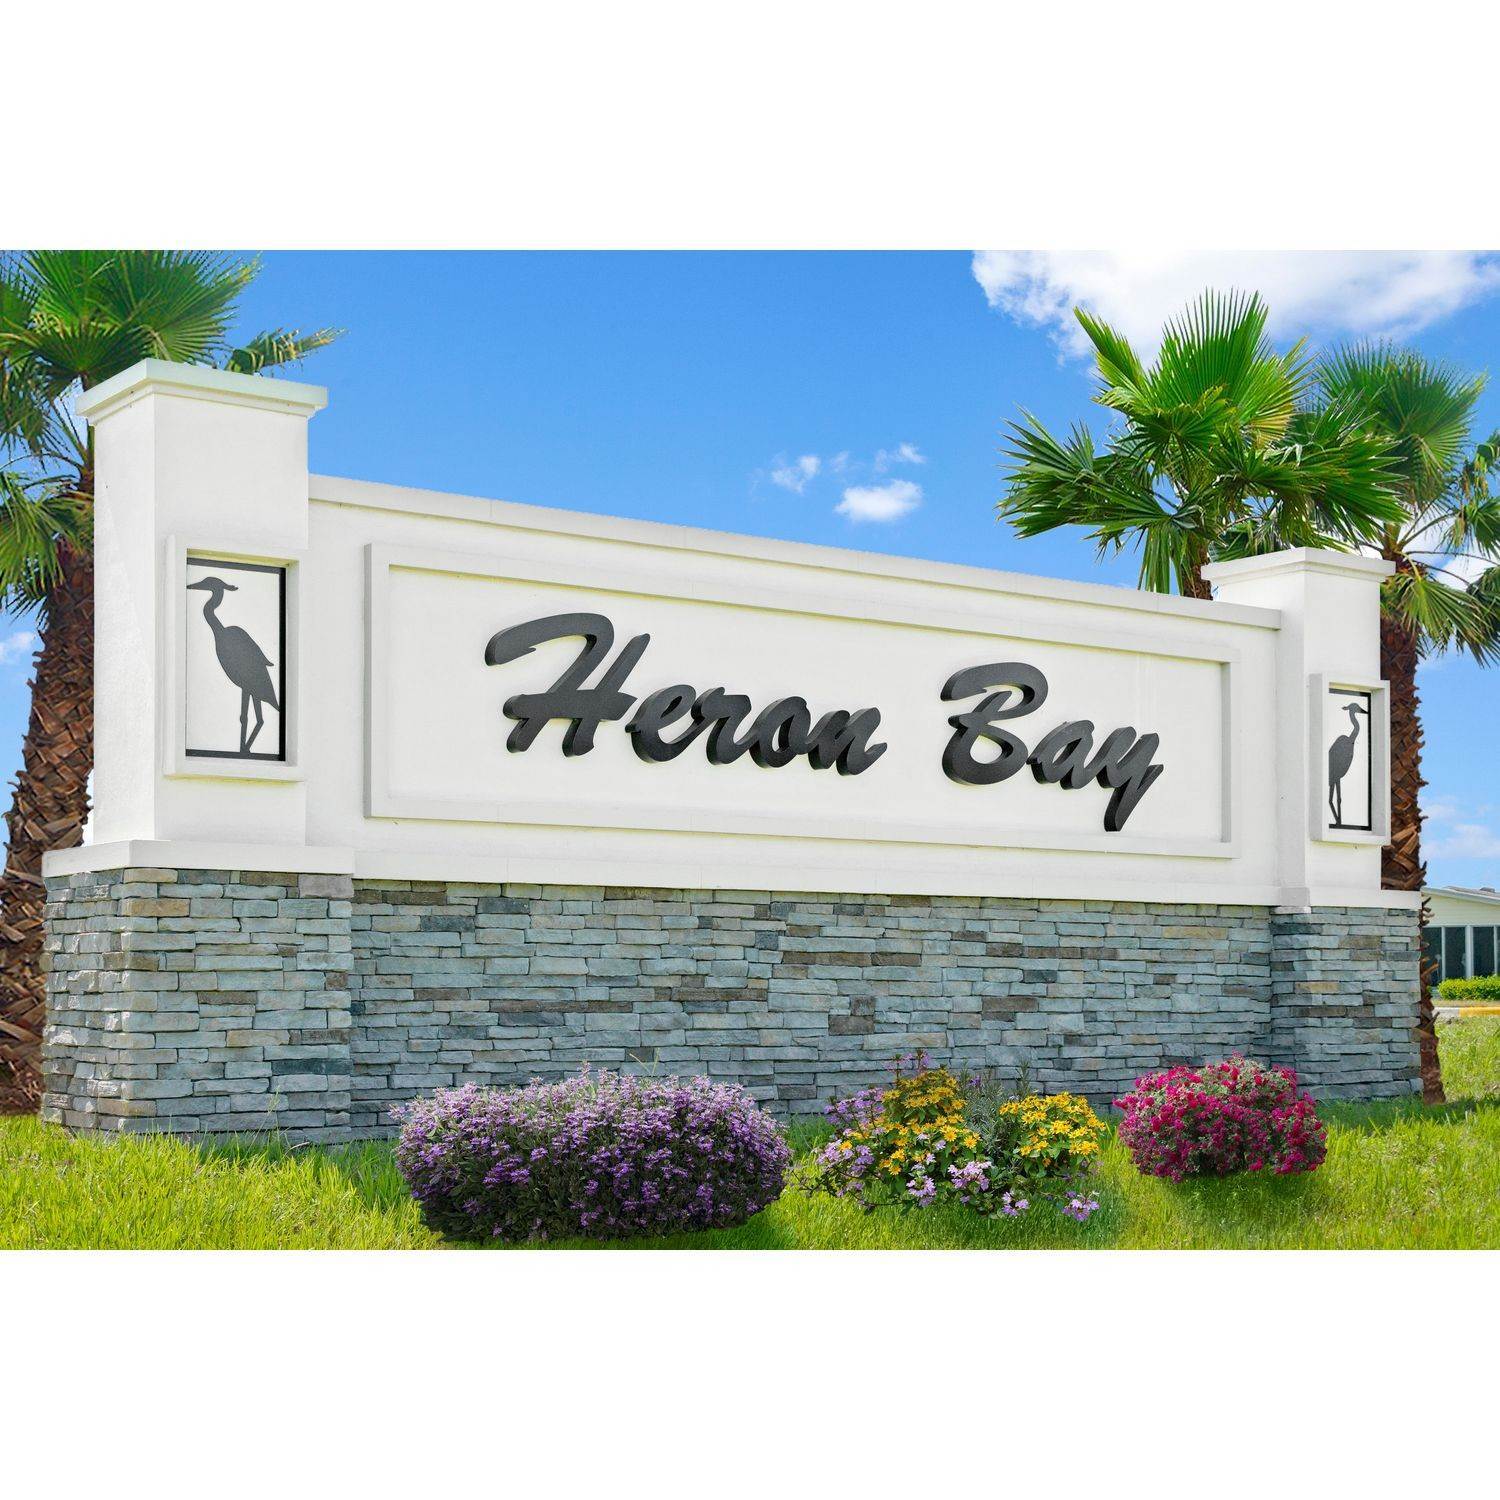 Heron Bay building at 2879 89th St. Cir. E., Palmetto, FL 34221